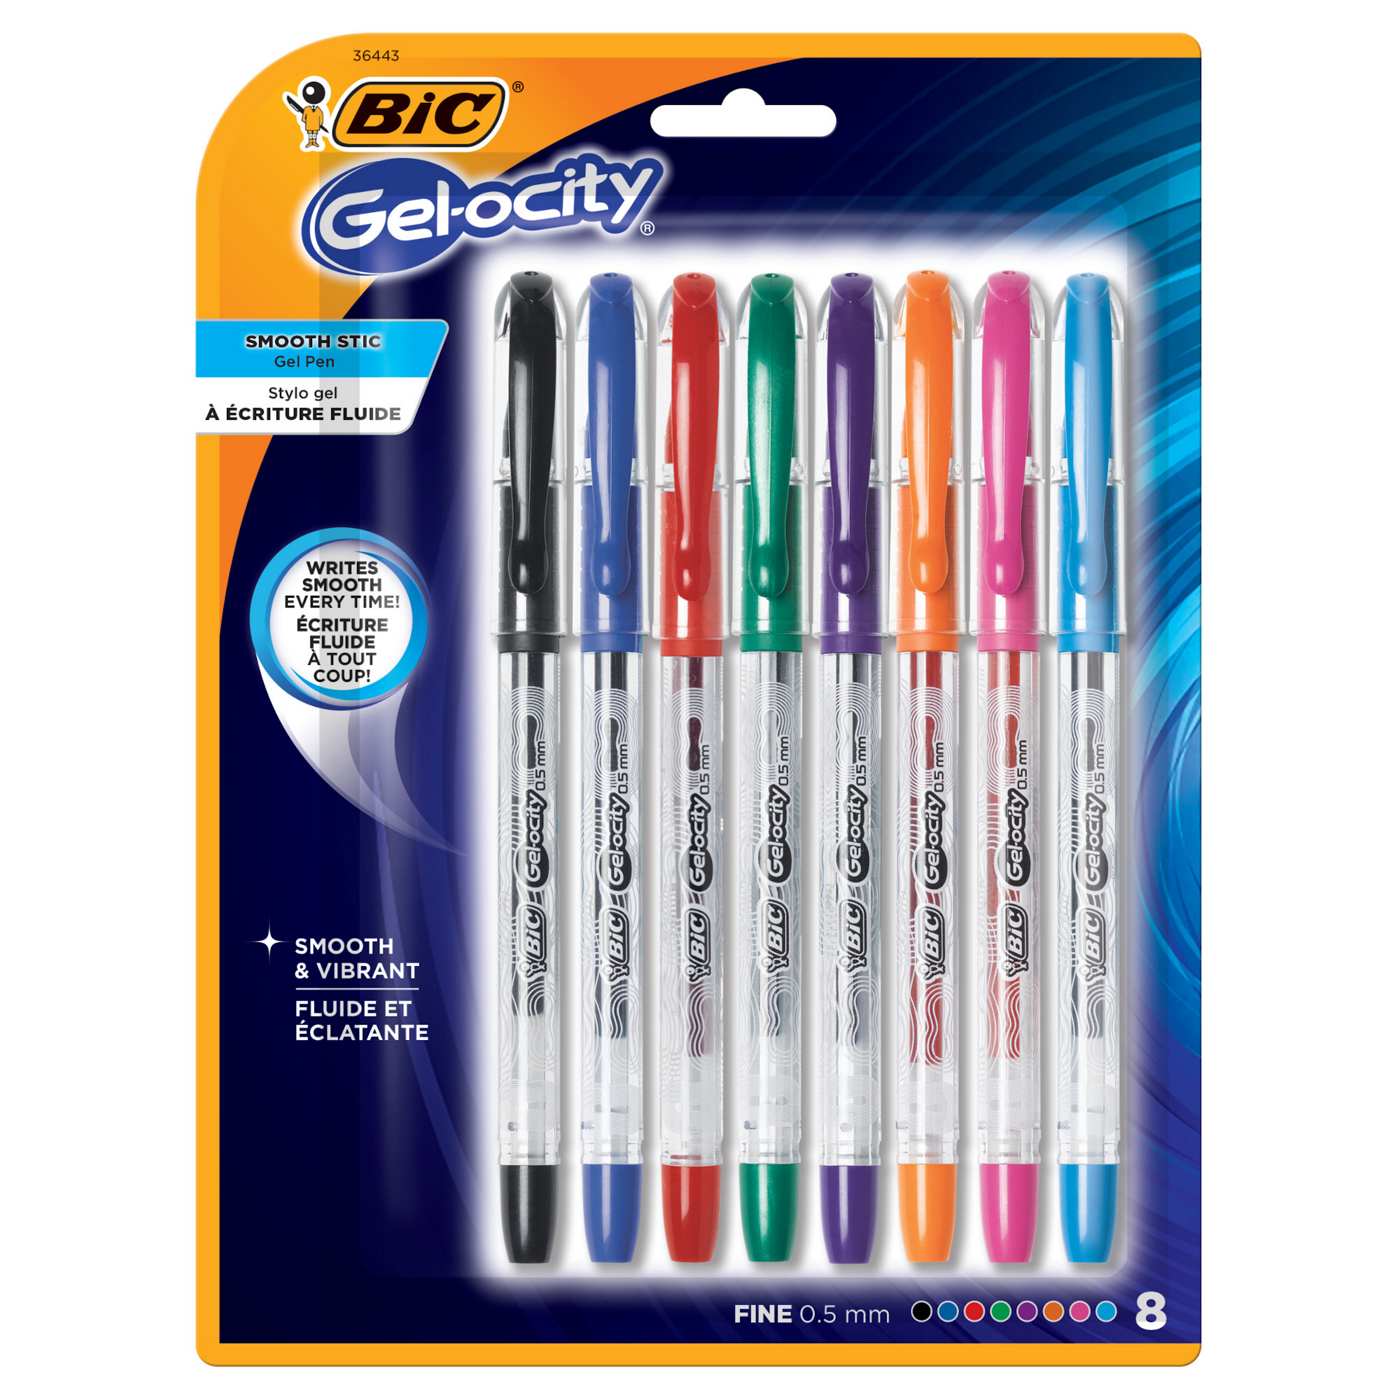 BIC Gel-ocity Smooth Stic 0.5mm Gel Pens - Assorted Ink - Shop Pens at H-E-B